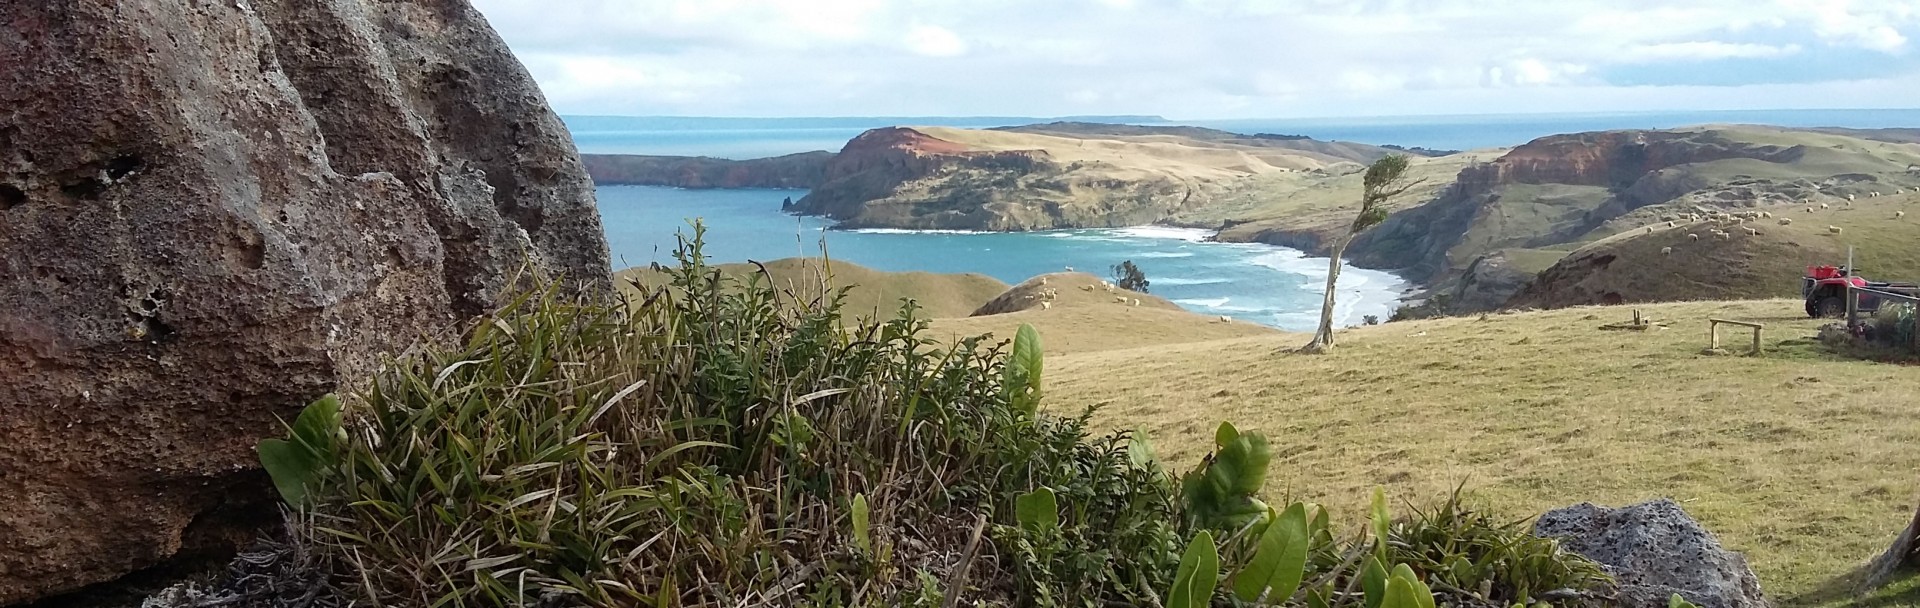 Chatham Islands - Rugged, Remote and Awe-Inspiring